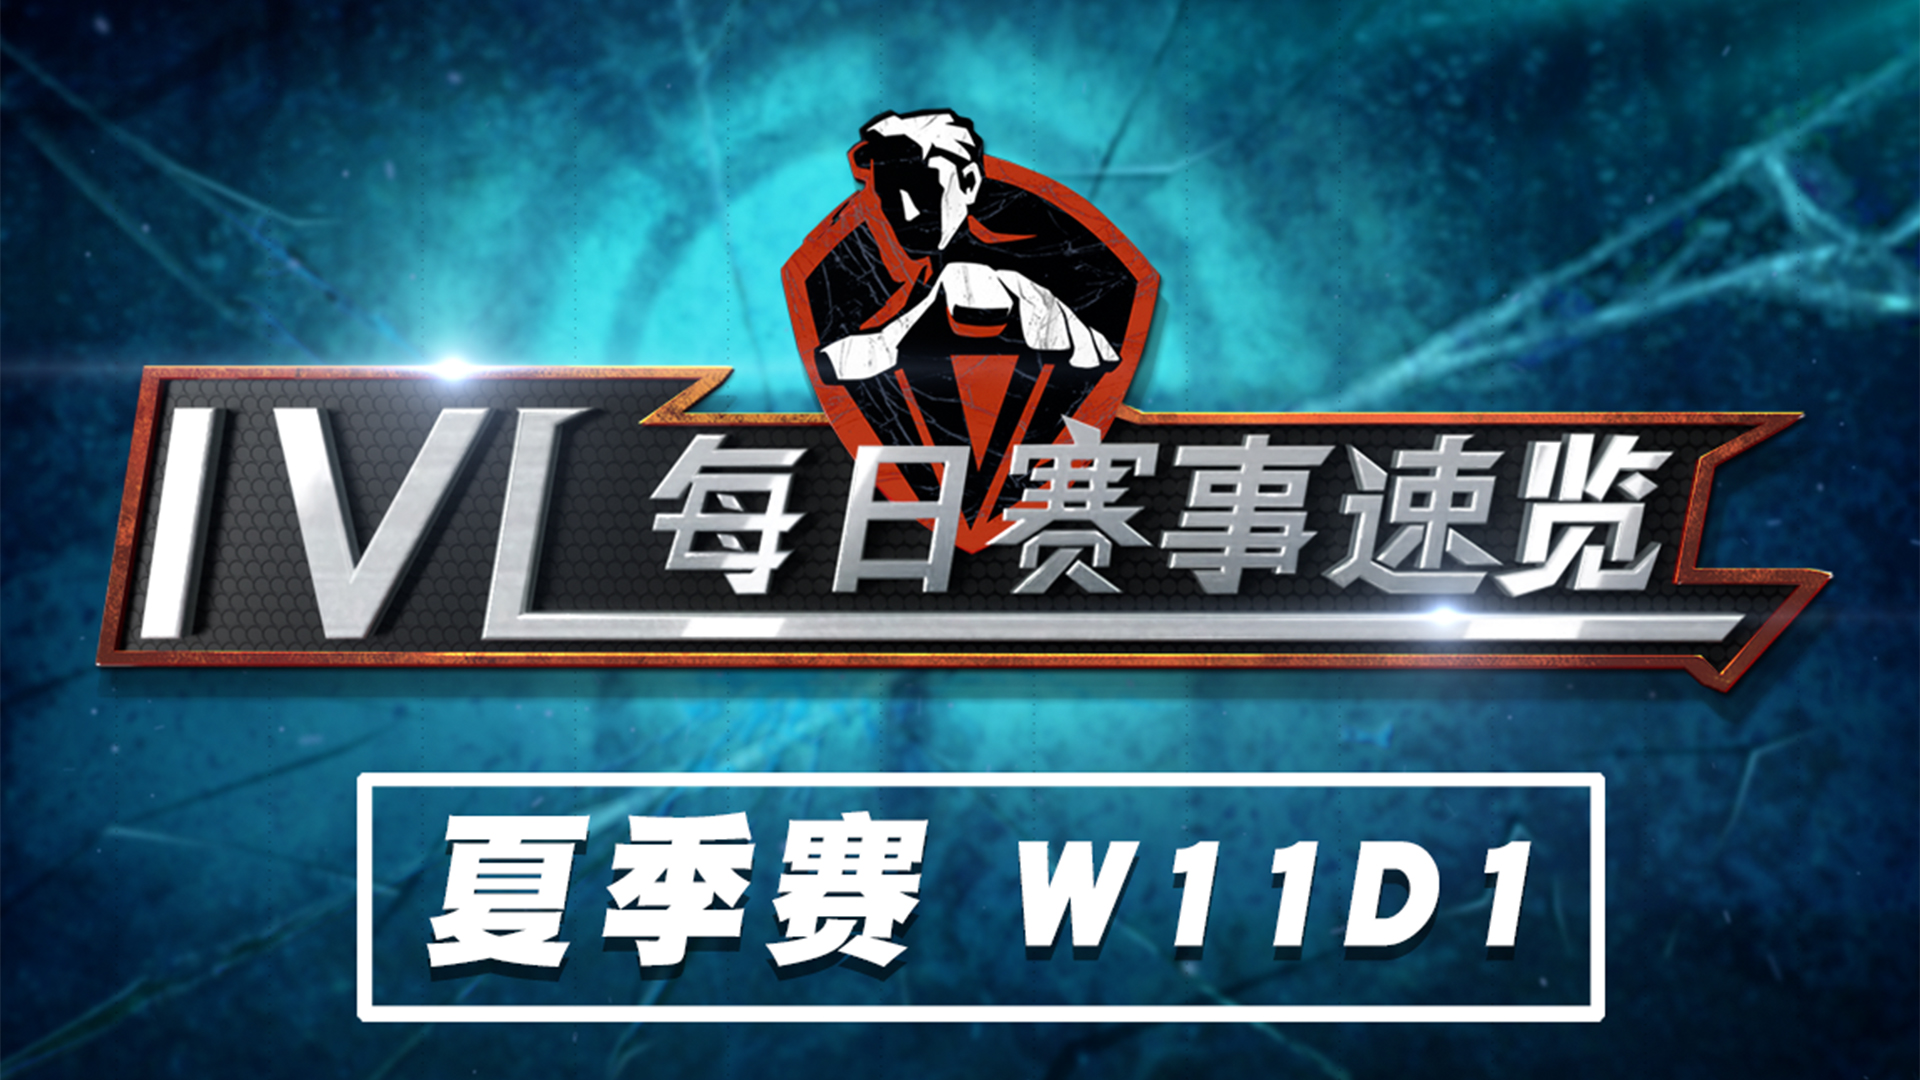 【2020IVL】夏季赛W11D1 赛事速览